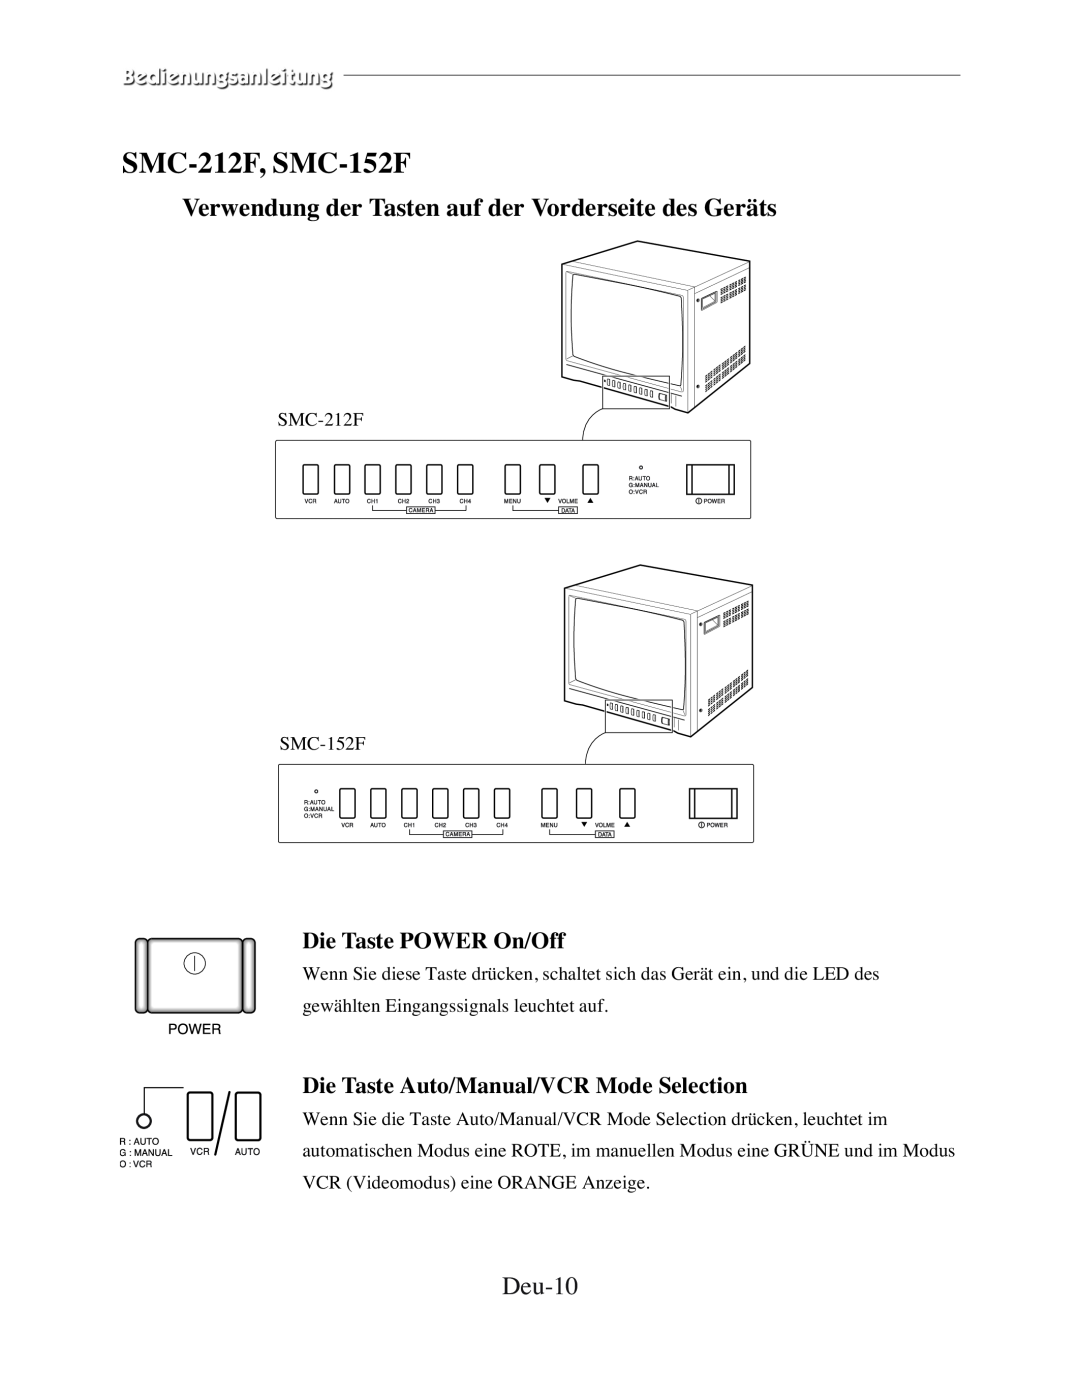 Samsung SMC-152FP manual SMC-212F, SMC-152F, Deu-10, Die Taste POWER On/Off, Die Taste Auto/Manual/VCR Mode Selection 